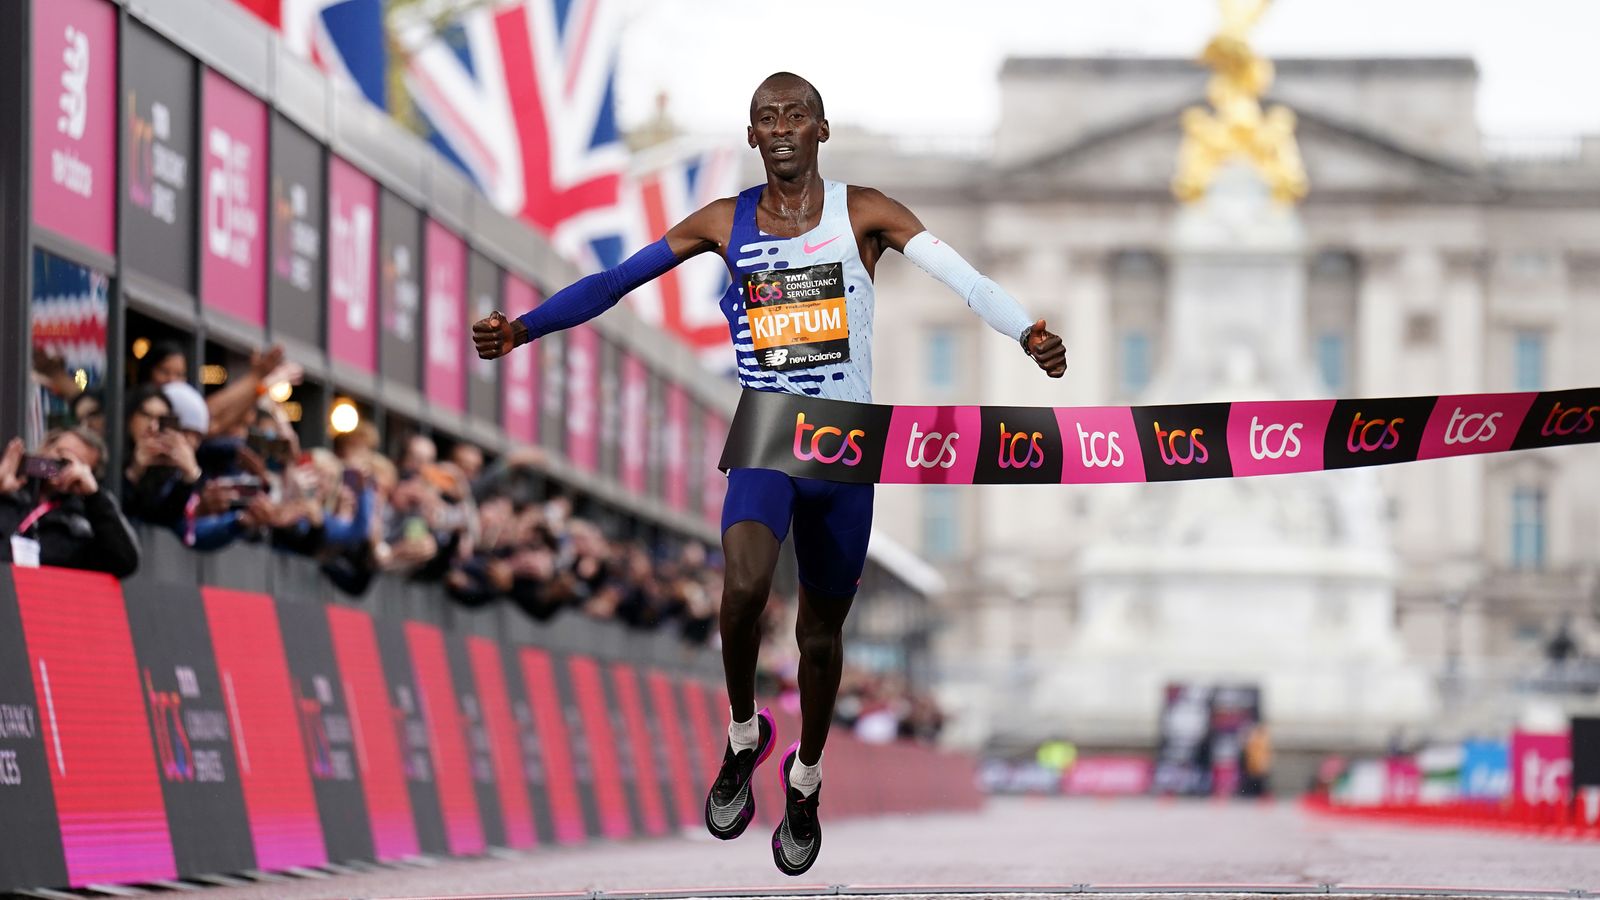 World marathon record holder Kelvin Kiptum and his coach tragically killed in road accident | International News